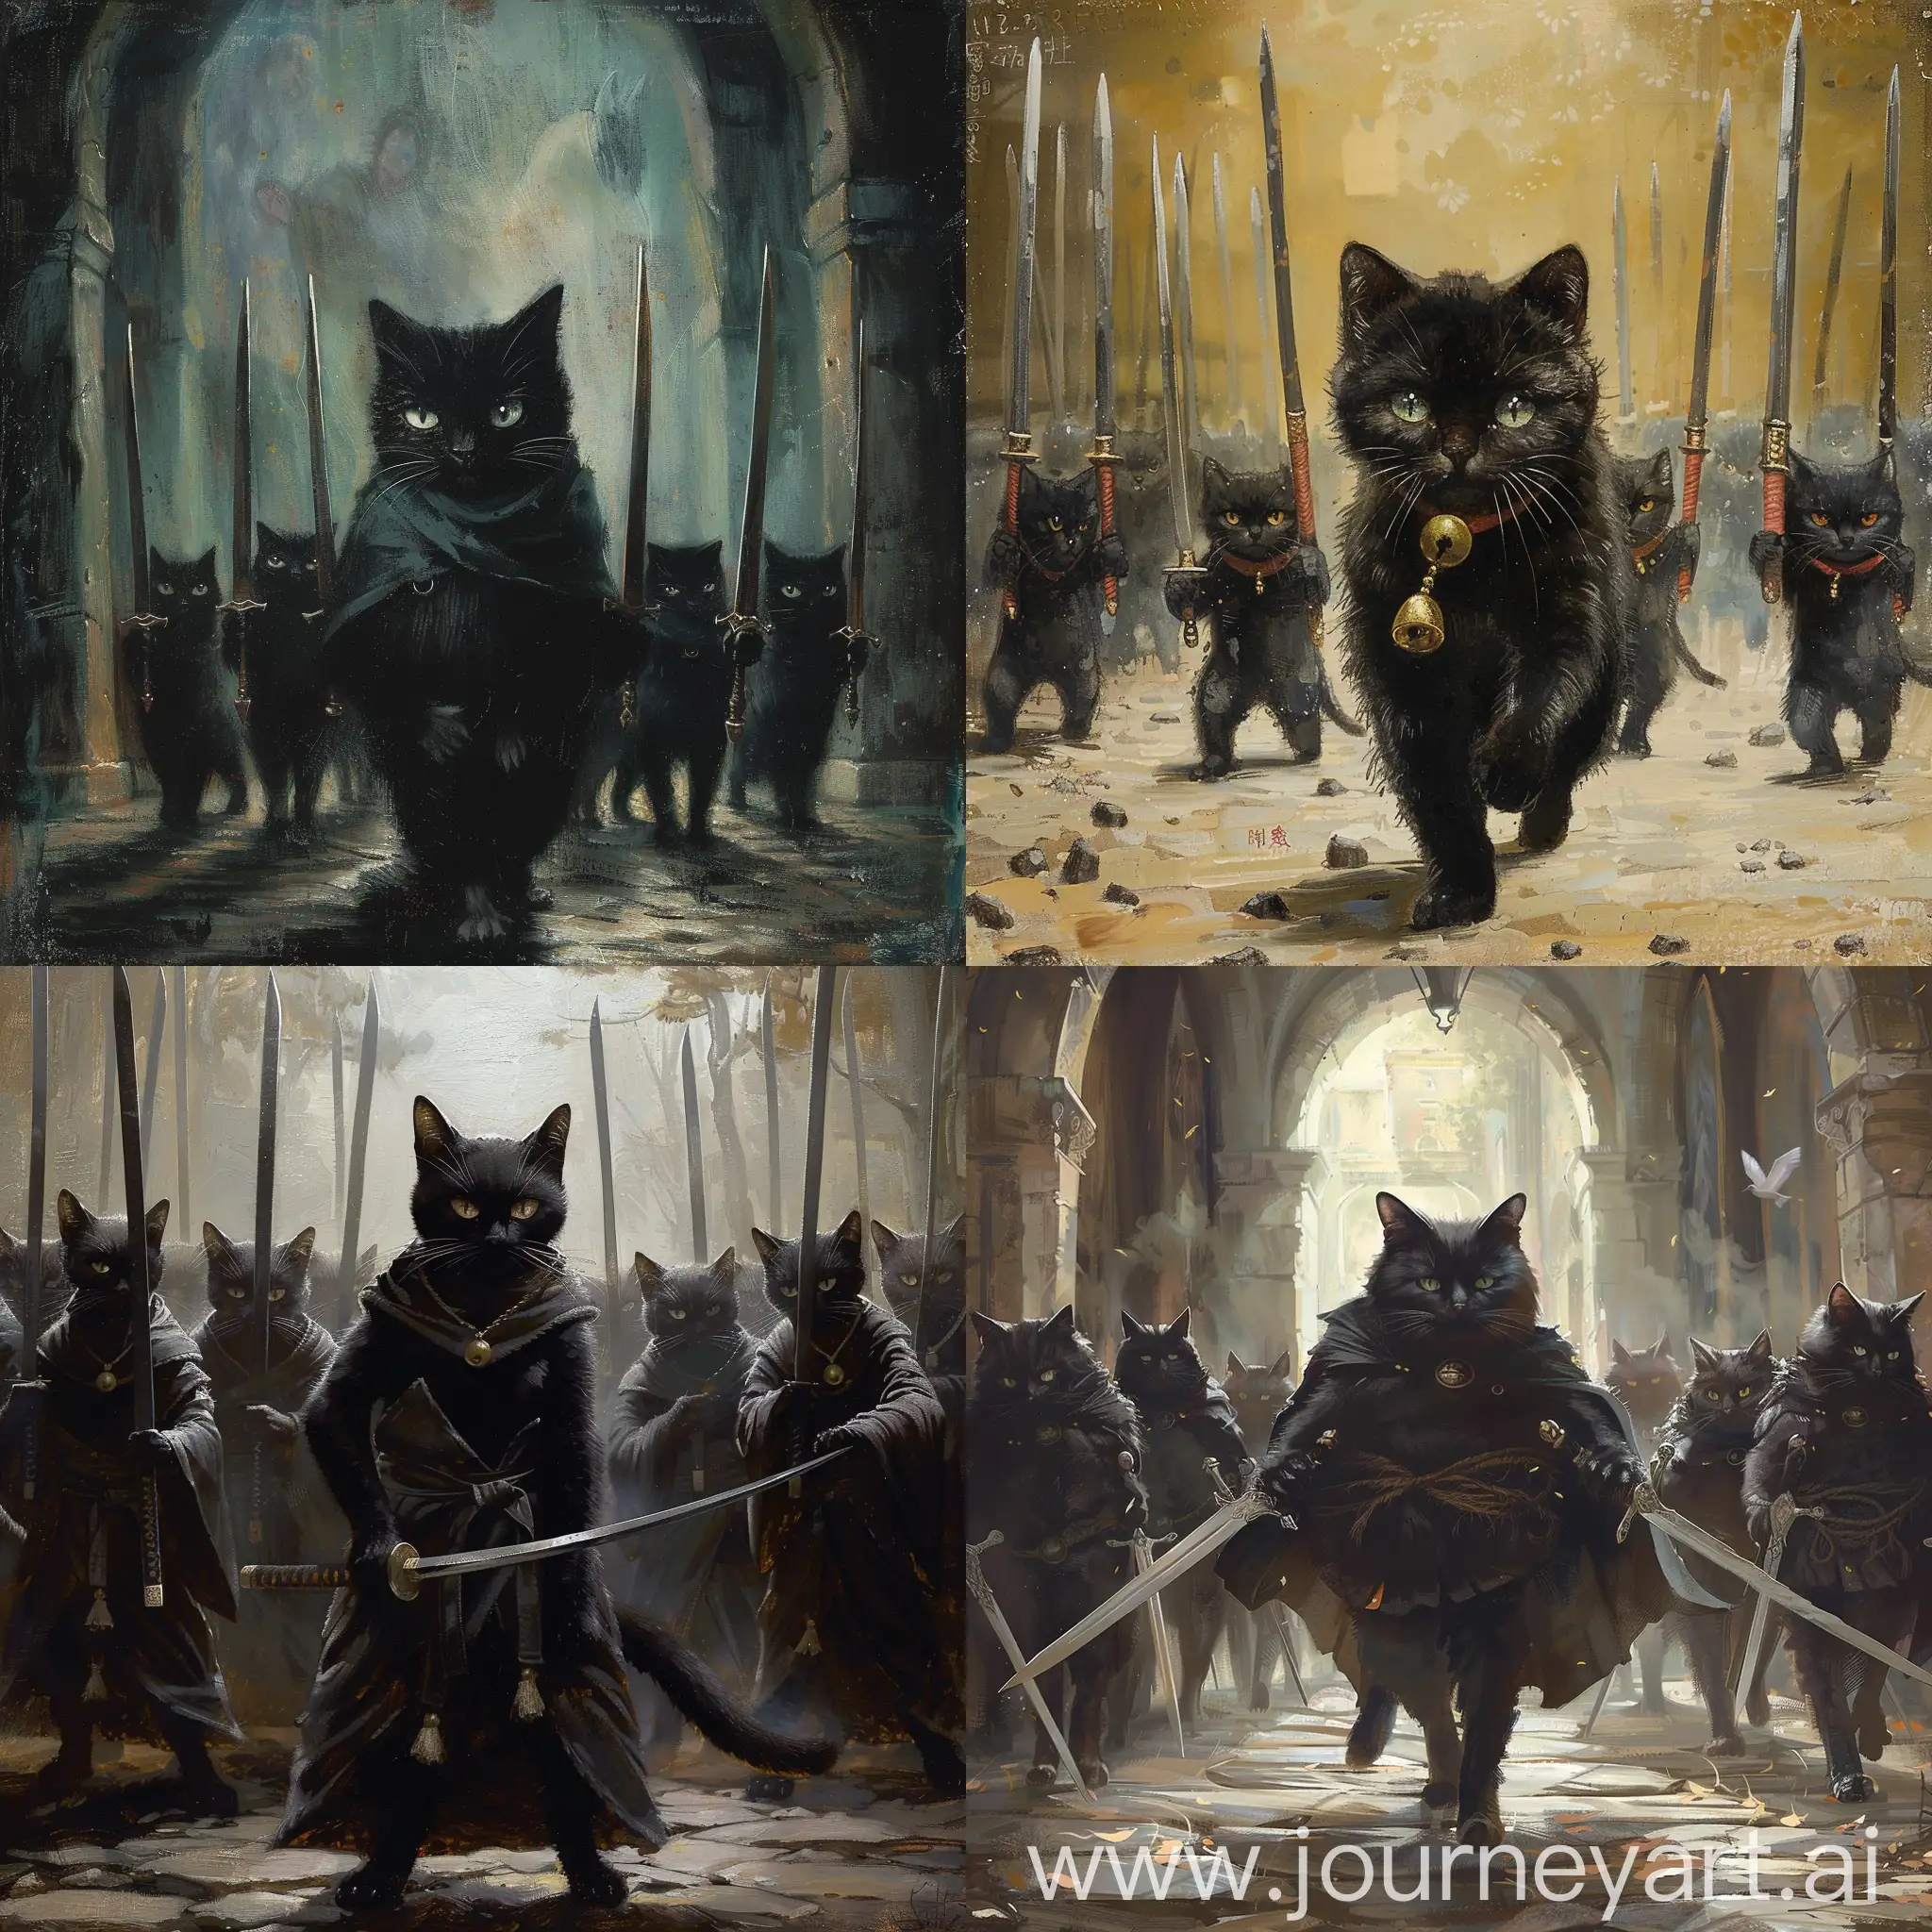 A black cat led by six sword cats